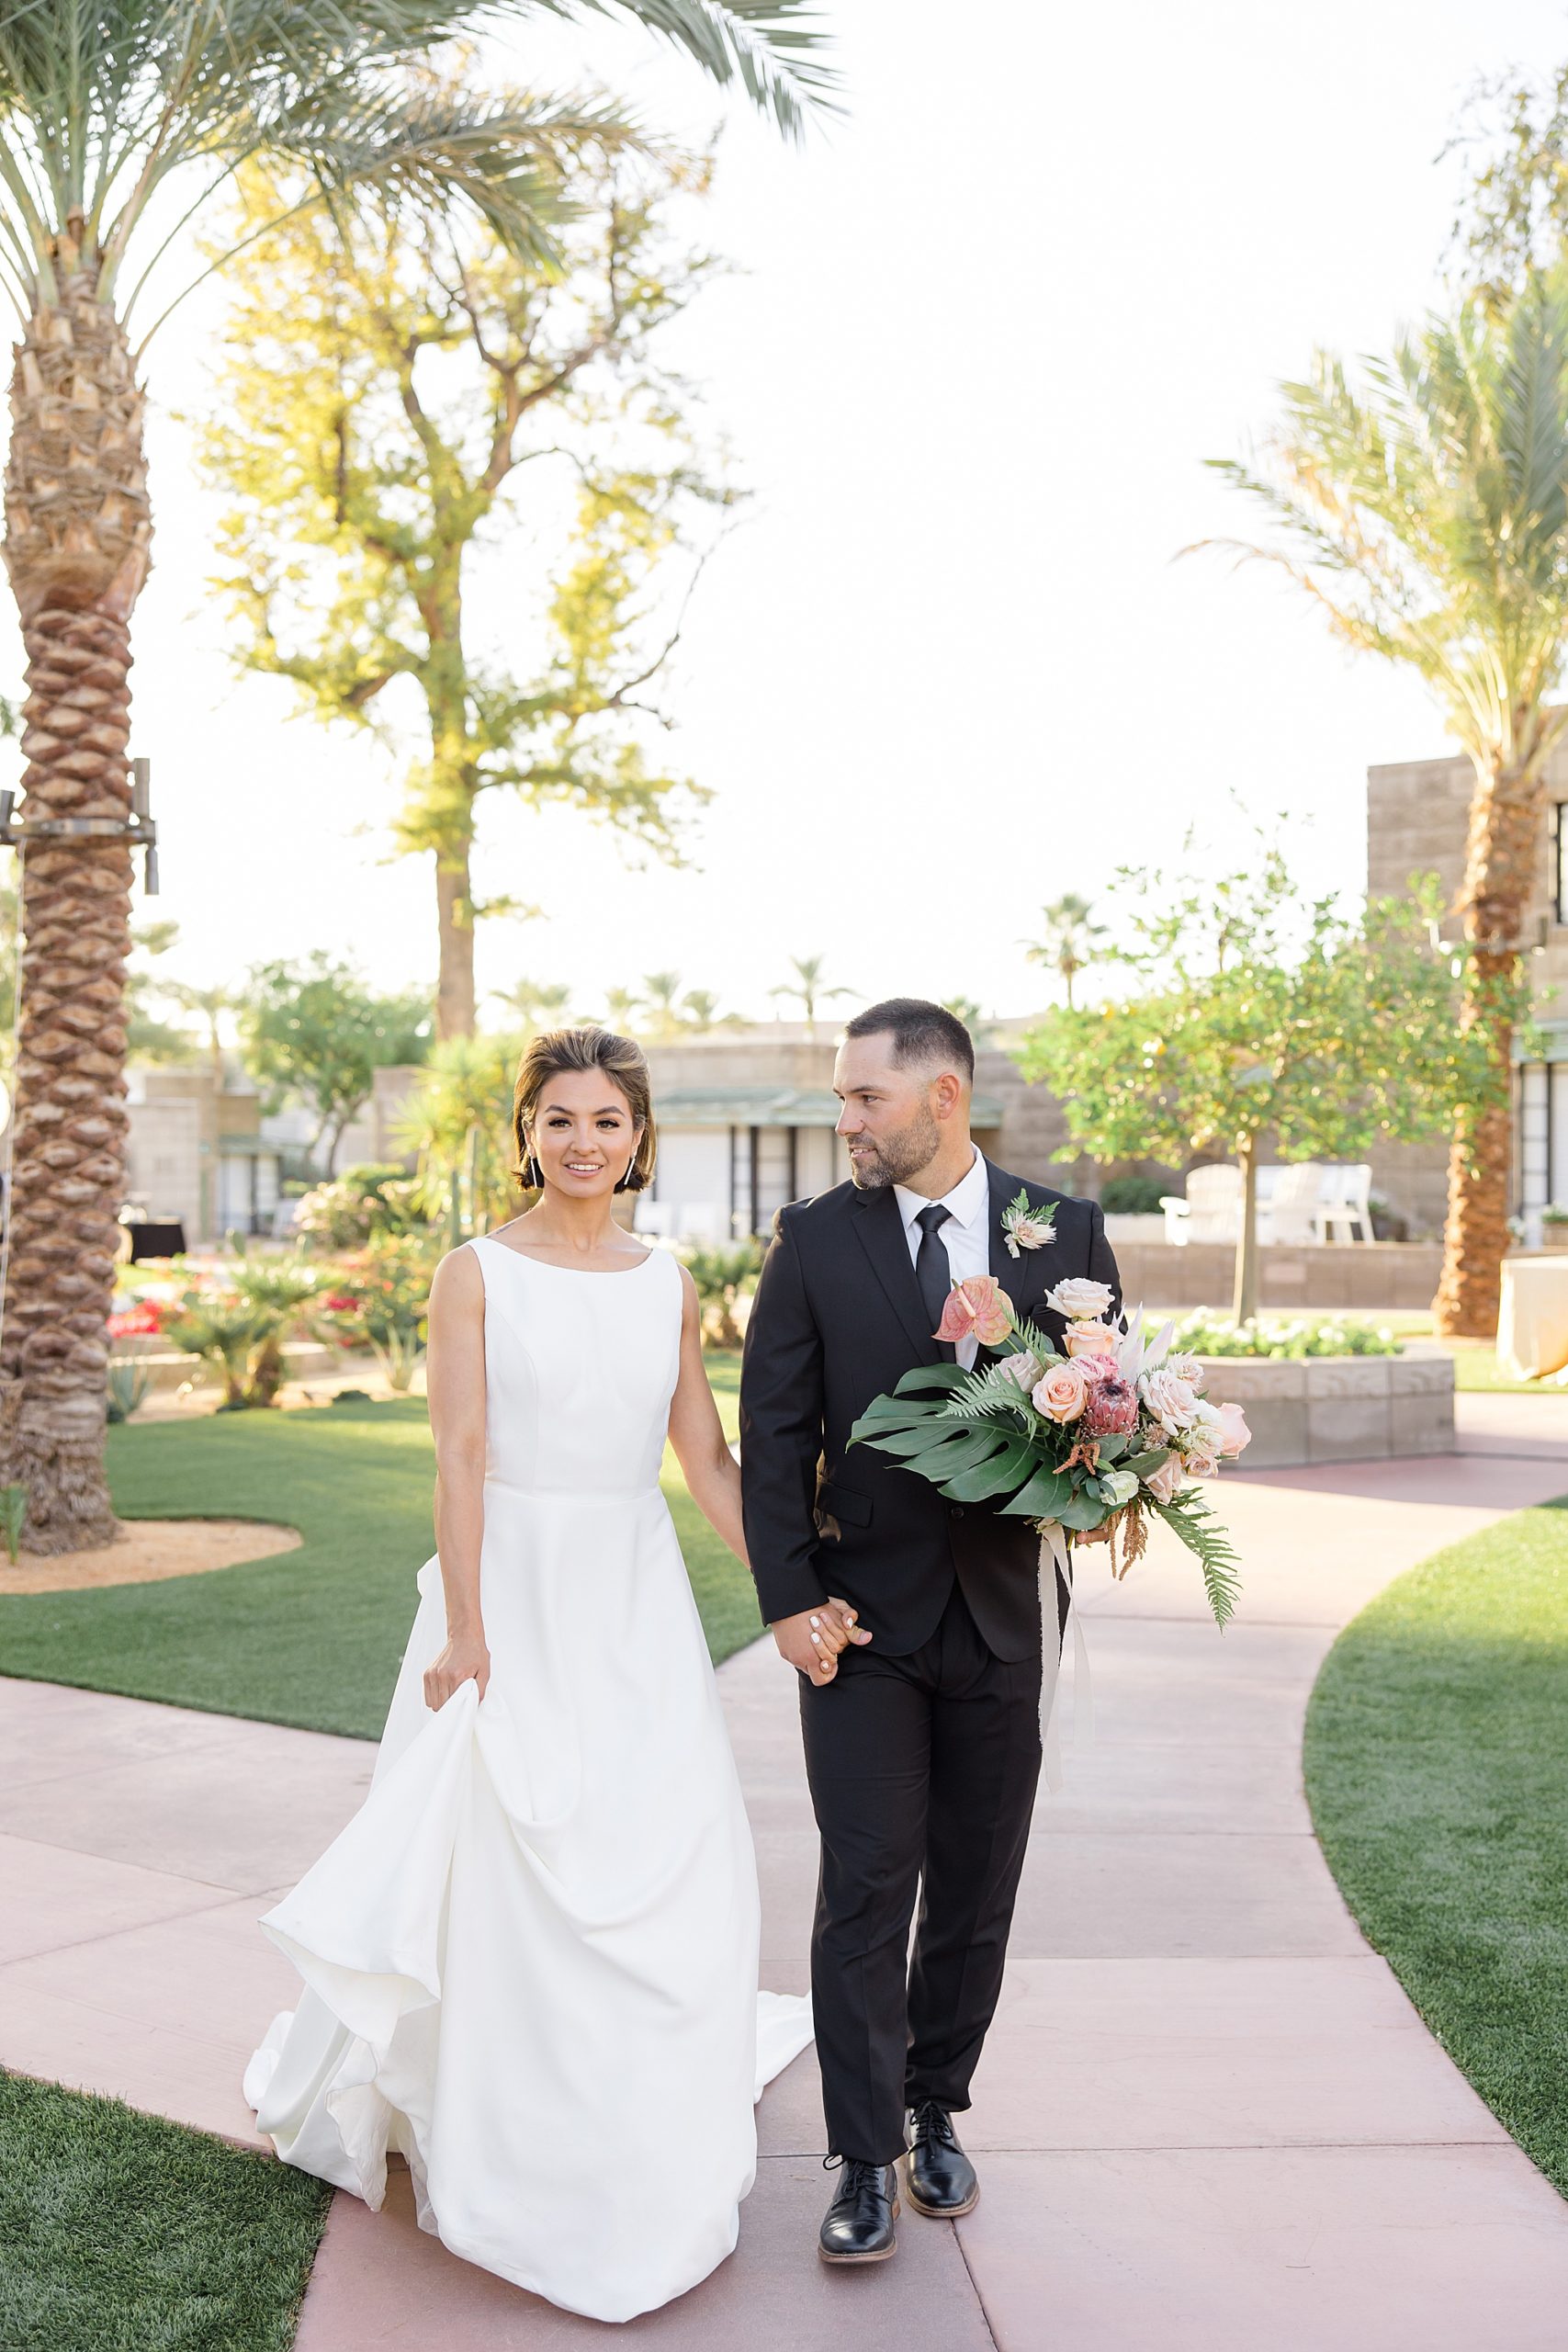 bride and groom walk together during wedding portraits at the Arizona Biltmore